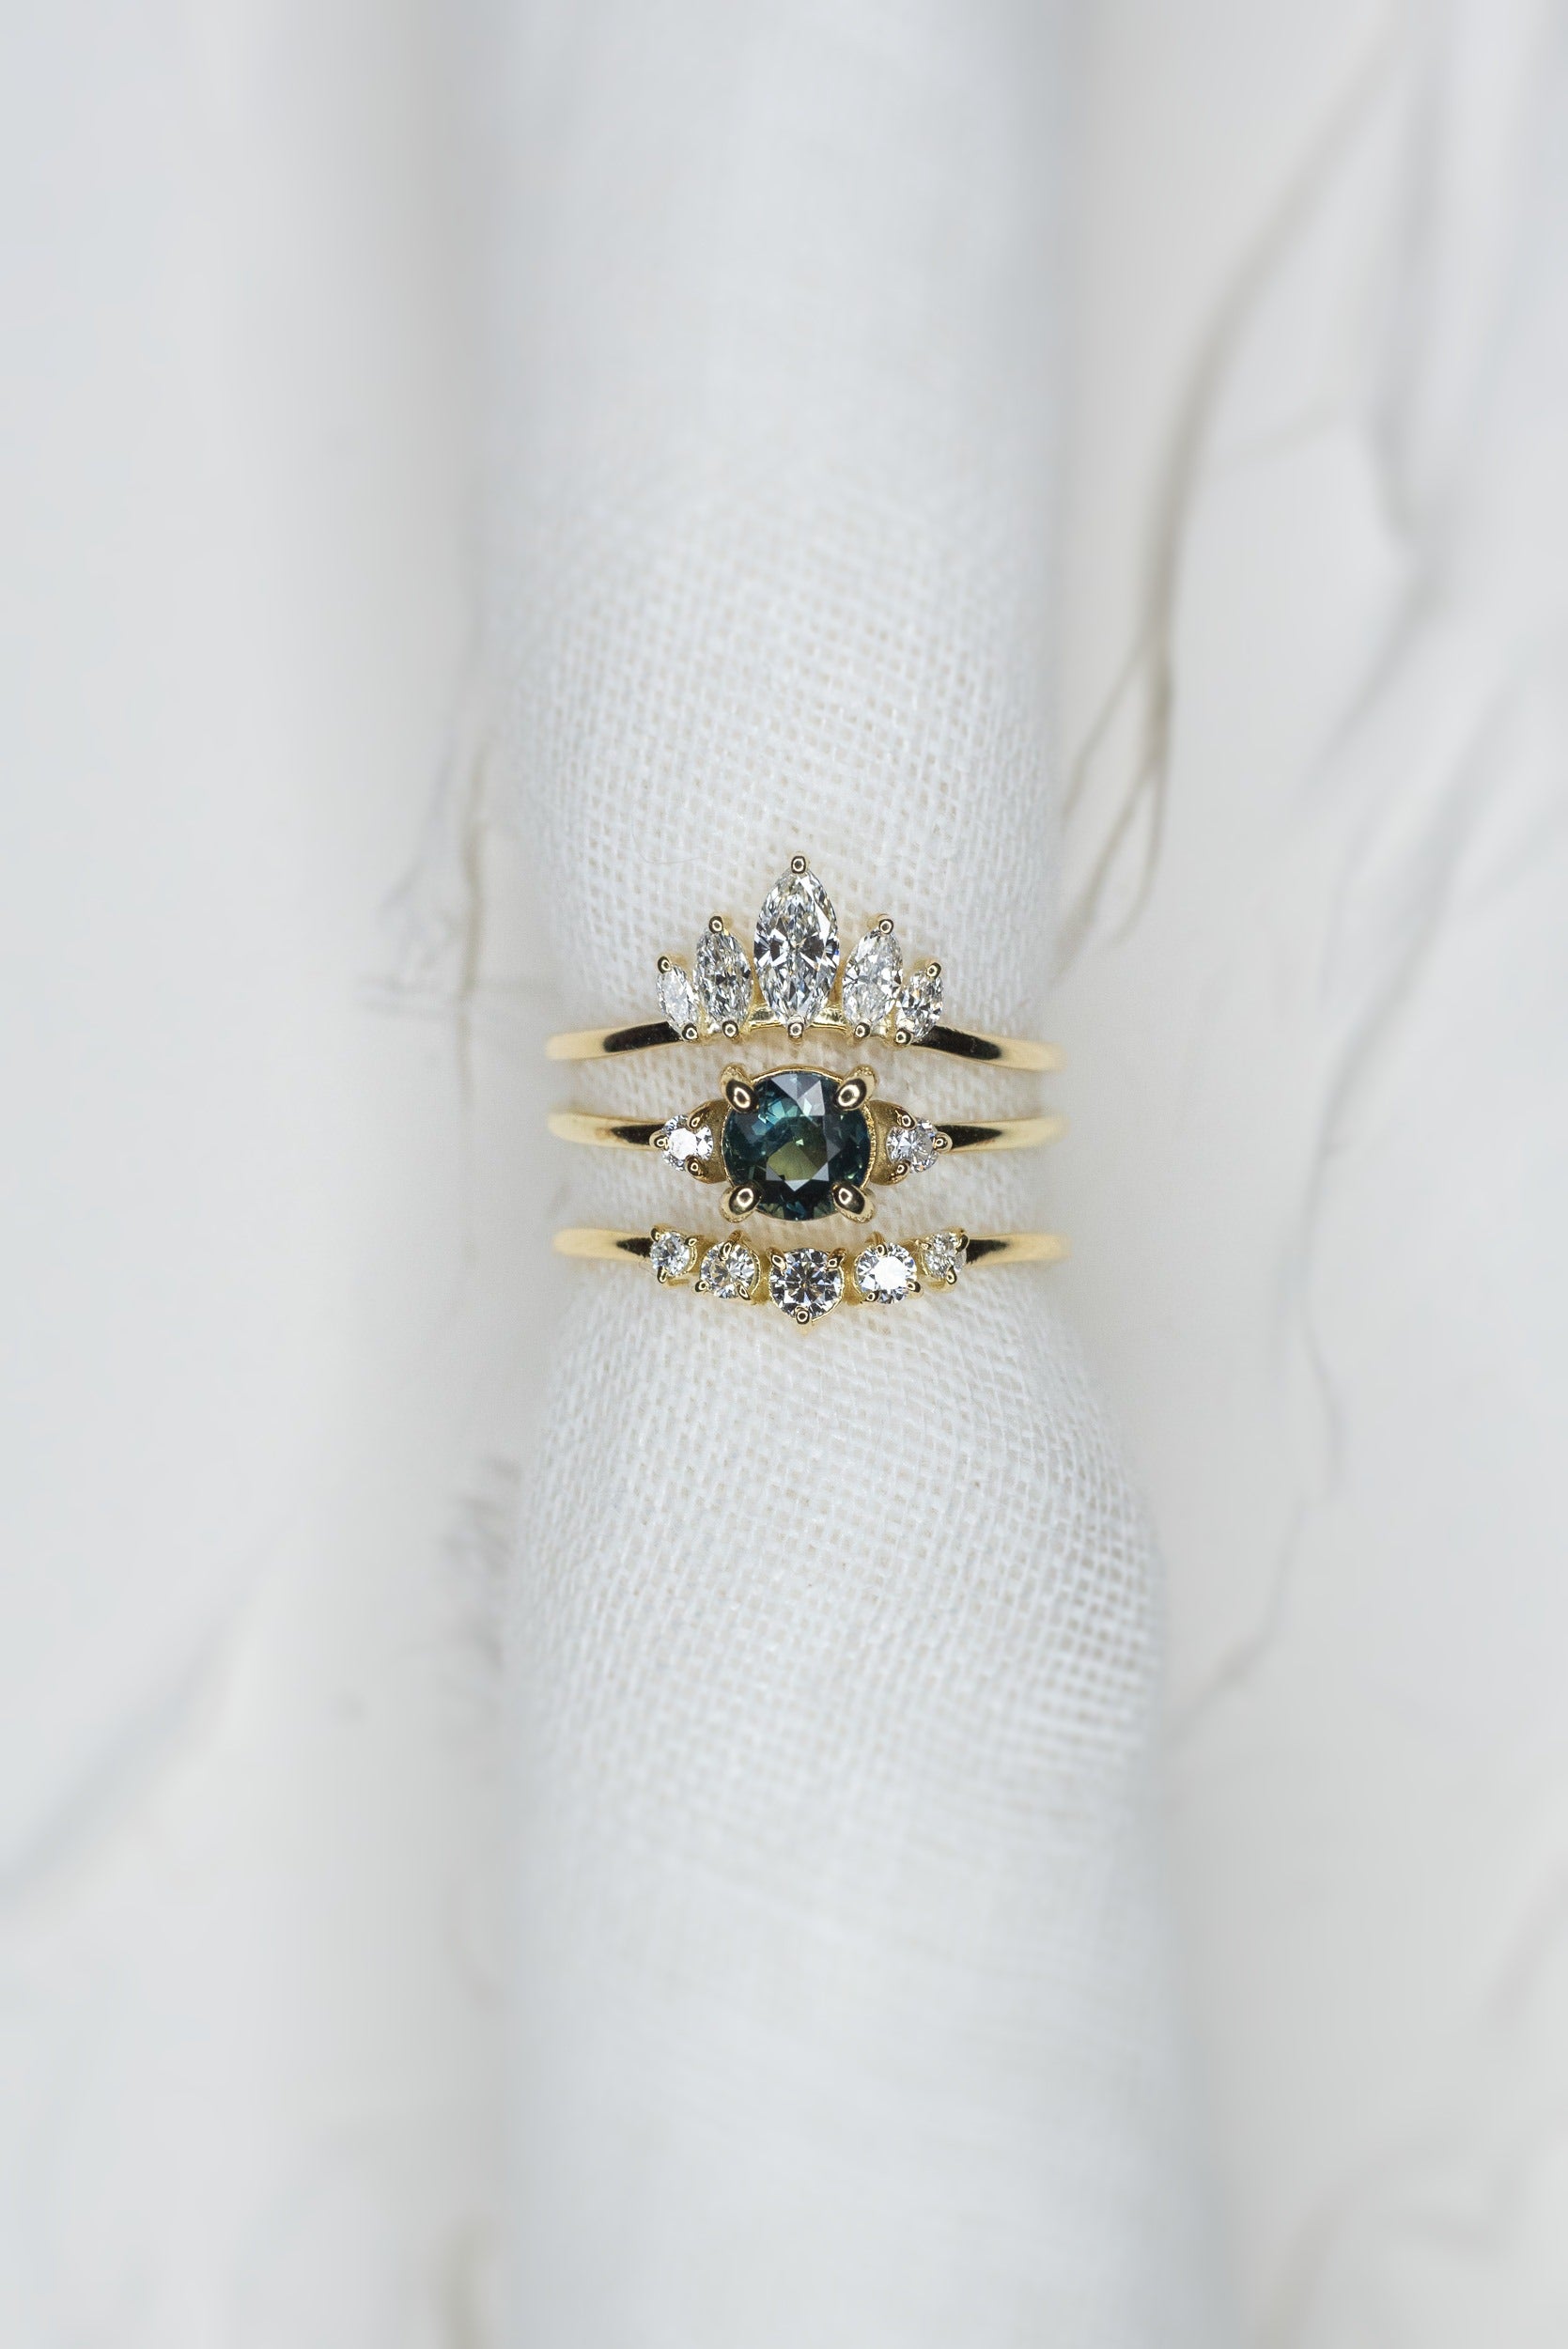 Crown of Skye - Lelya - bespoke engagement and wedding rings made in Scotland, UK